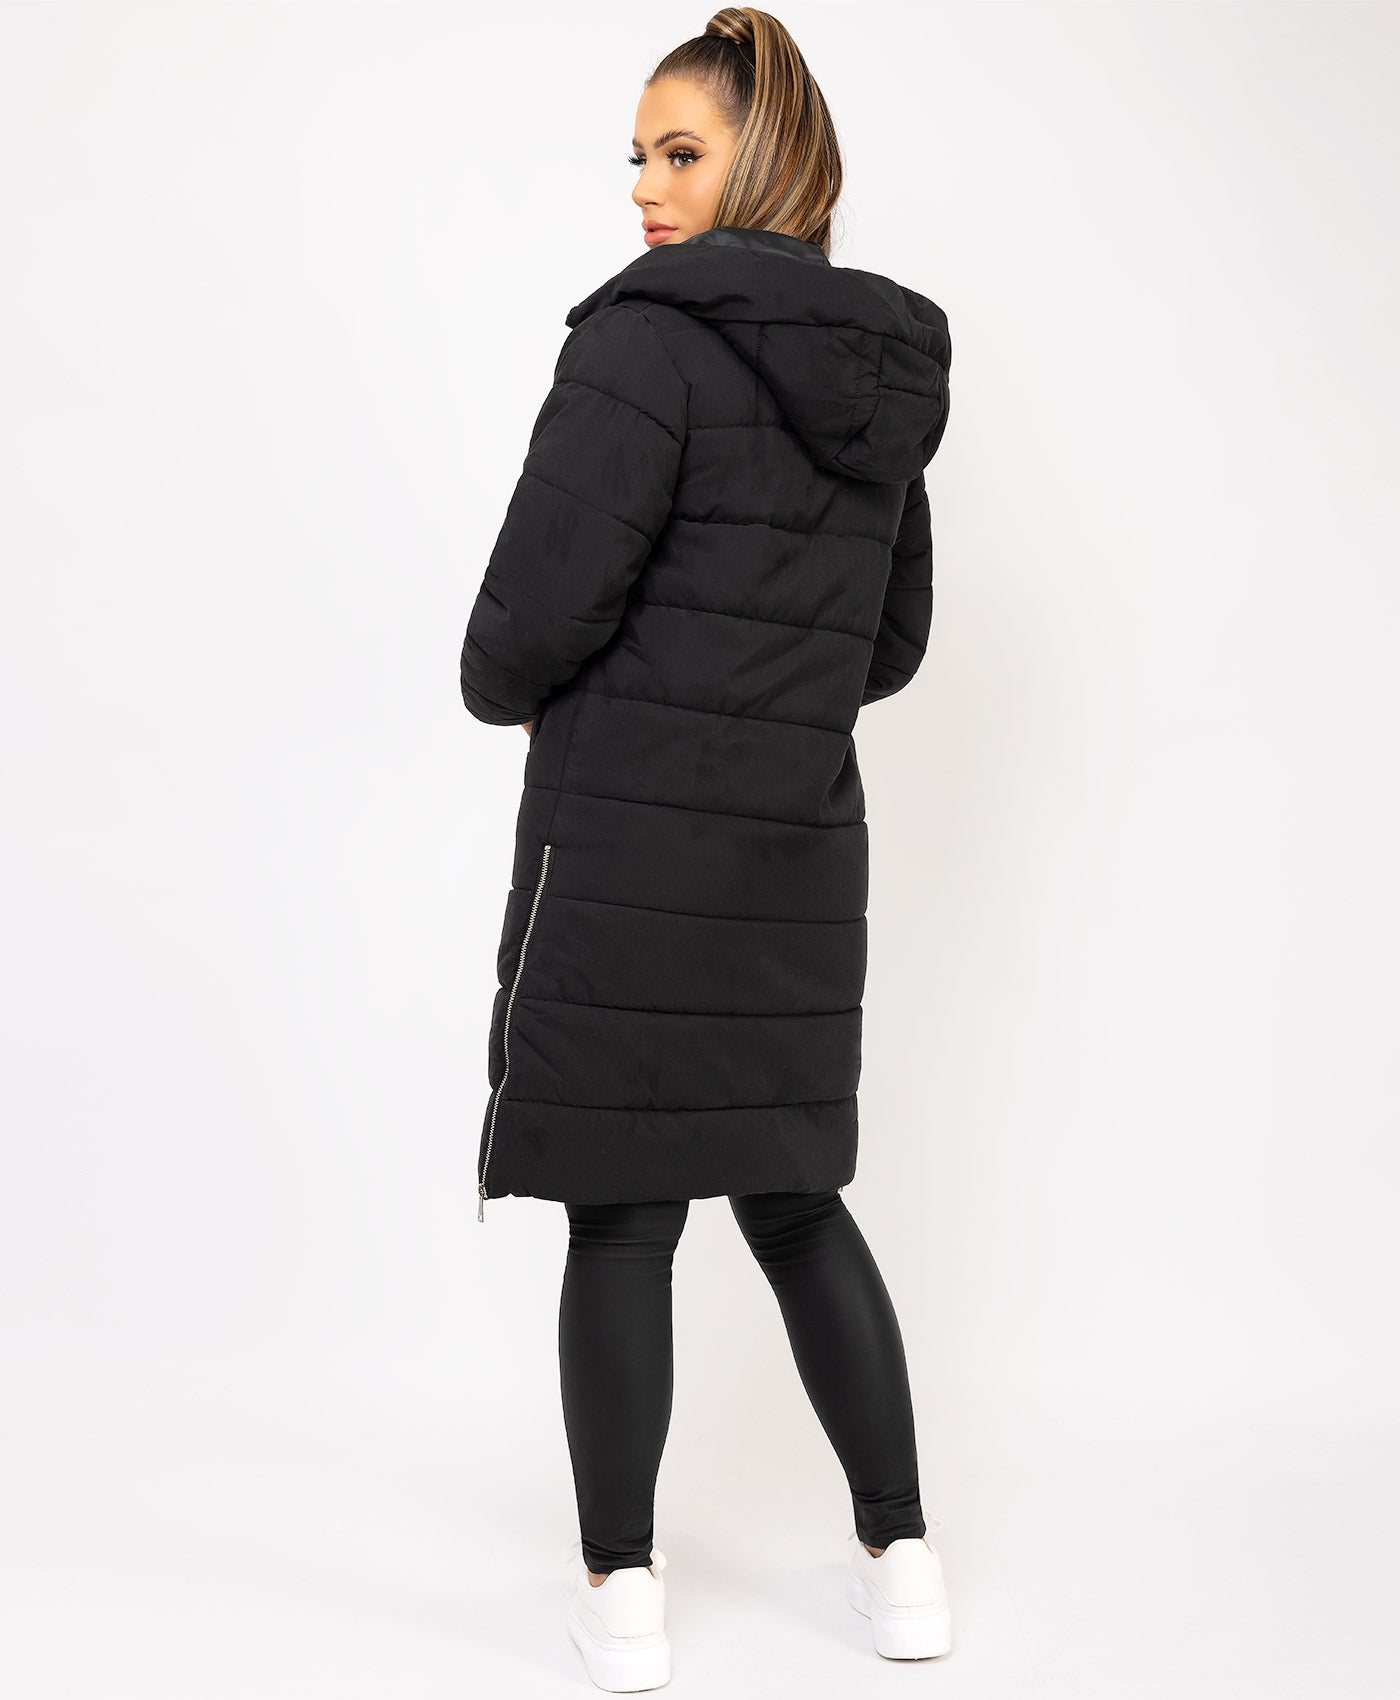 Black-Longline-Side-Zip-Long-Sleeve-Hooded-Puffer-Coat-Jacket-8